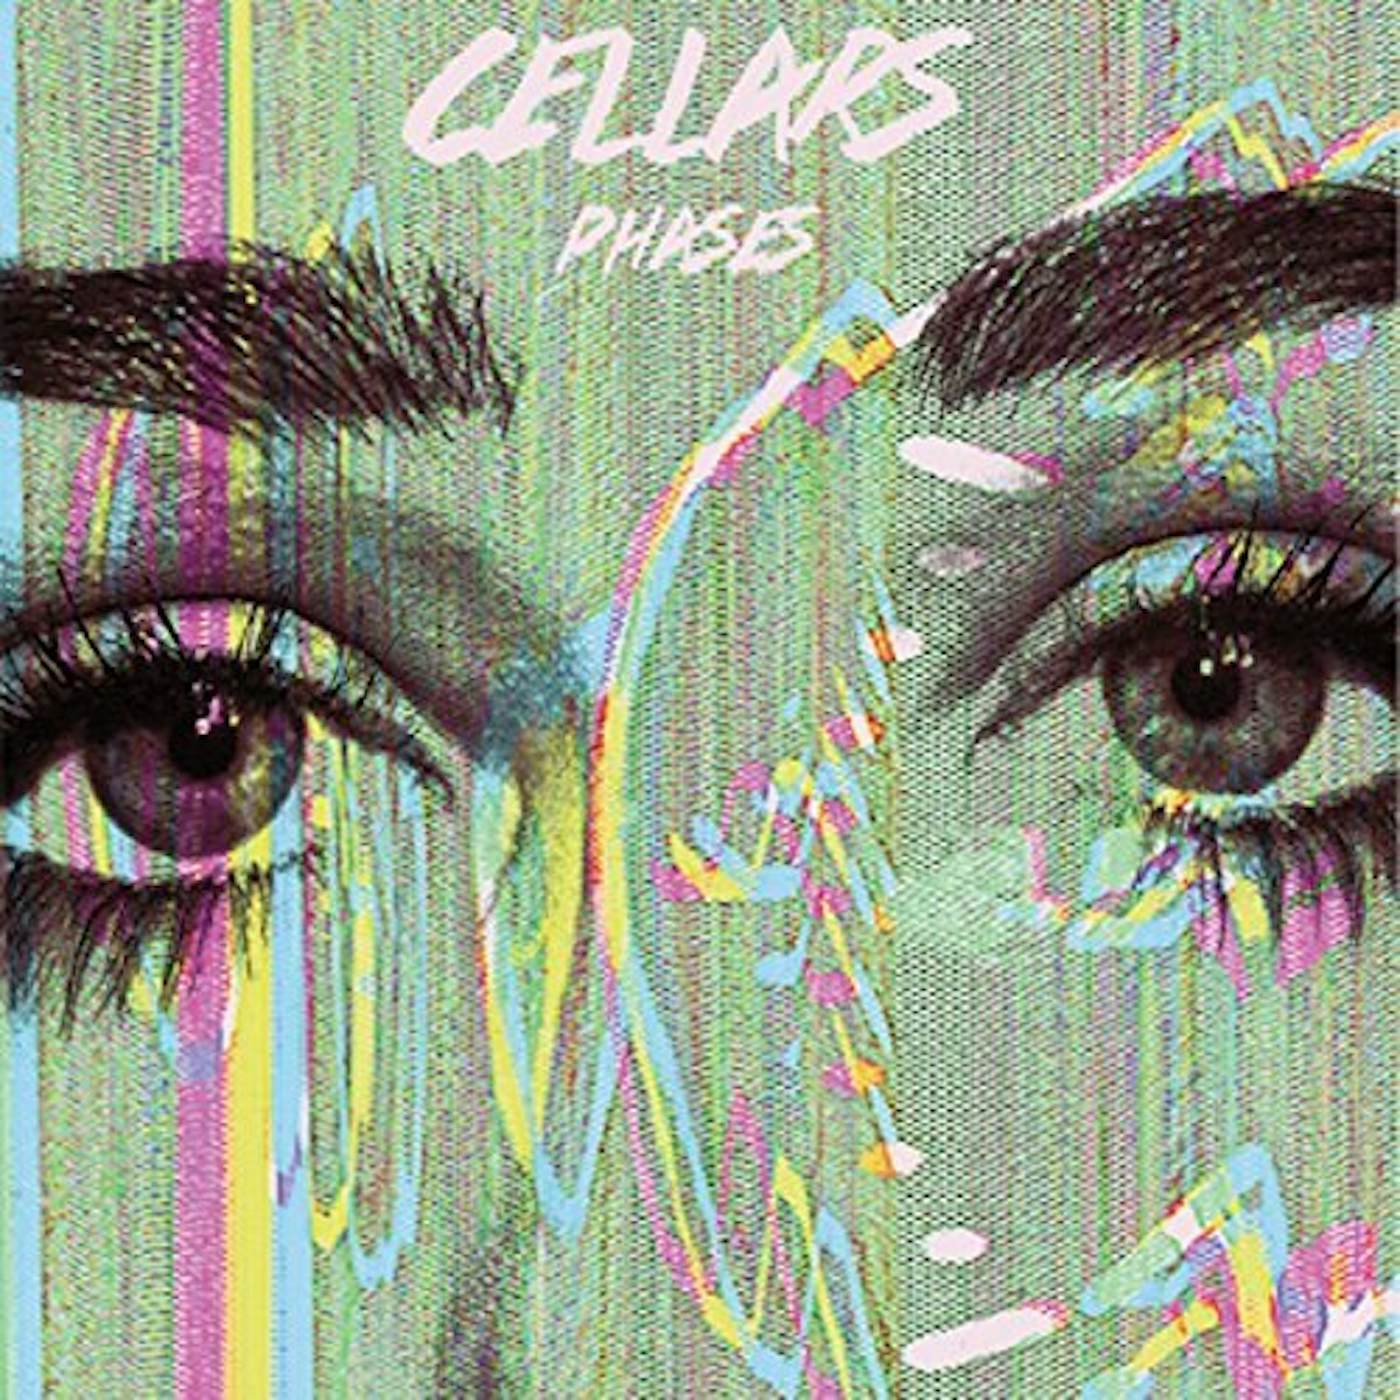 Cellars Phases Vinyl Record